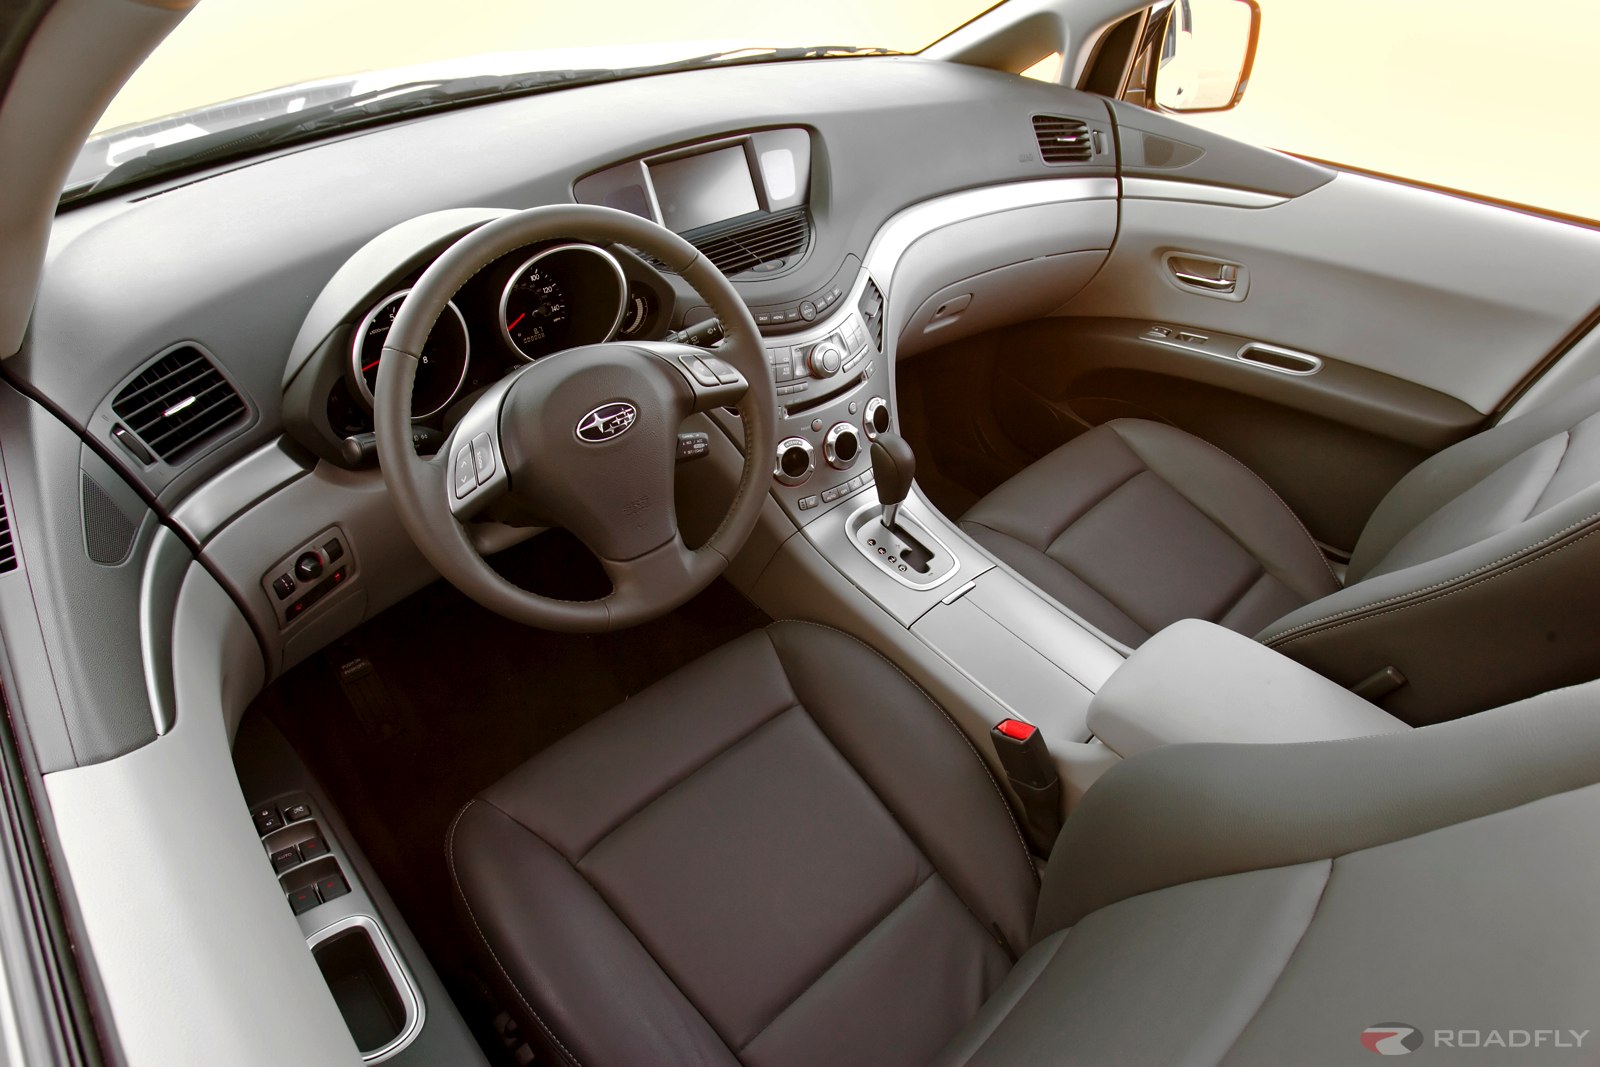 Subaru Tribeca interiorpicture 7 , reviews, news, specs, buy car